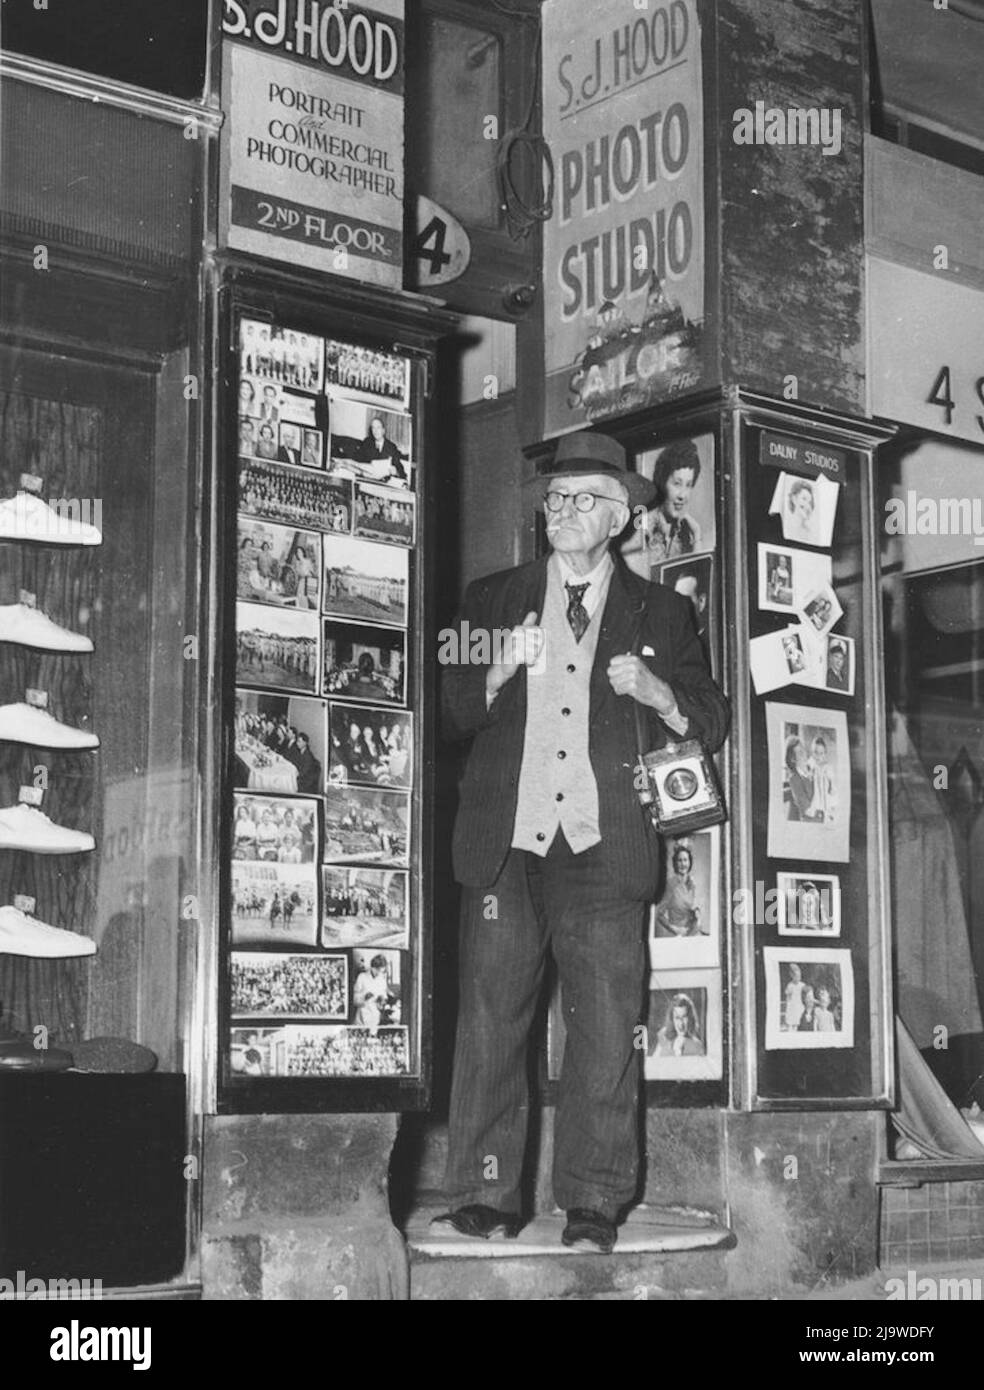 Sam Hood - Outside of his Dalny Studio - 1953 - photographer Ted Hood Stock Photo